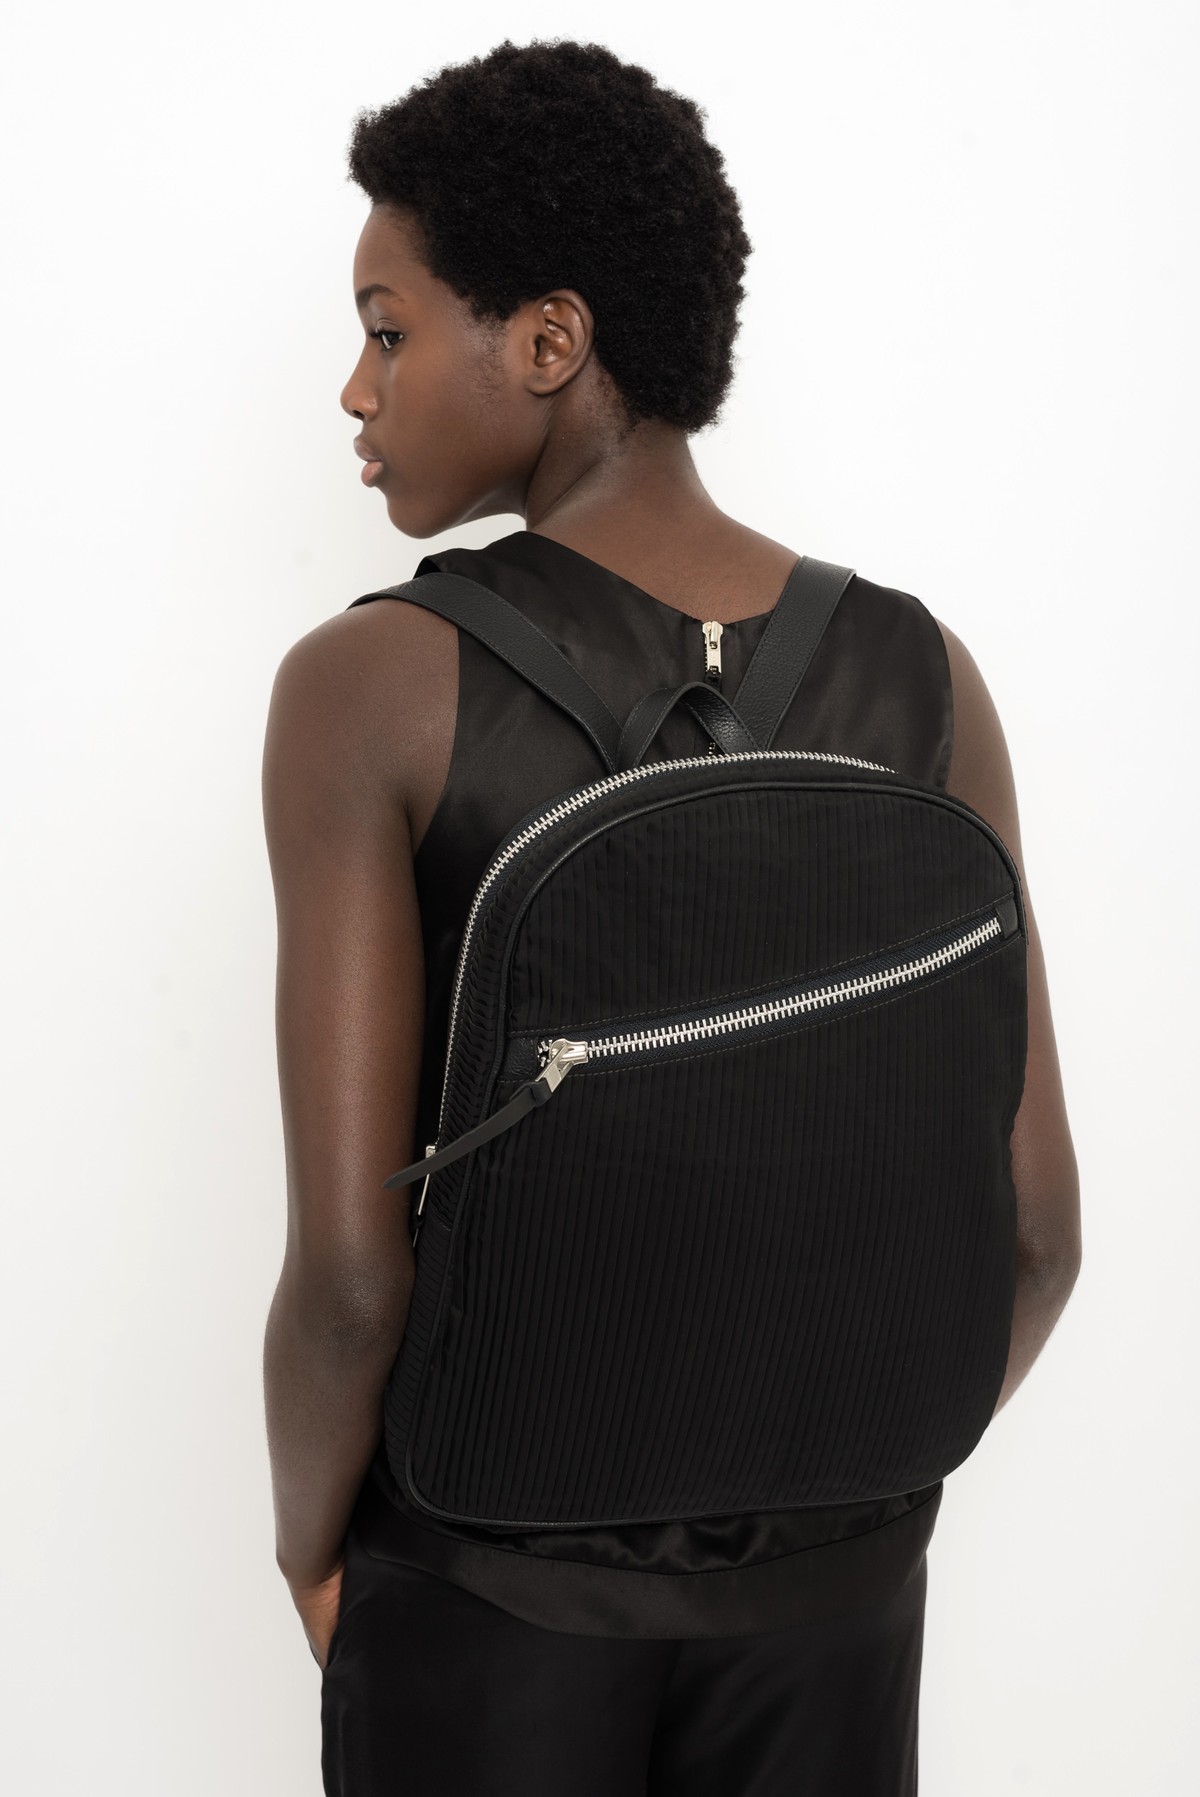 mochila em poliéster reciclado plissado | pleated recycled polyester backpack